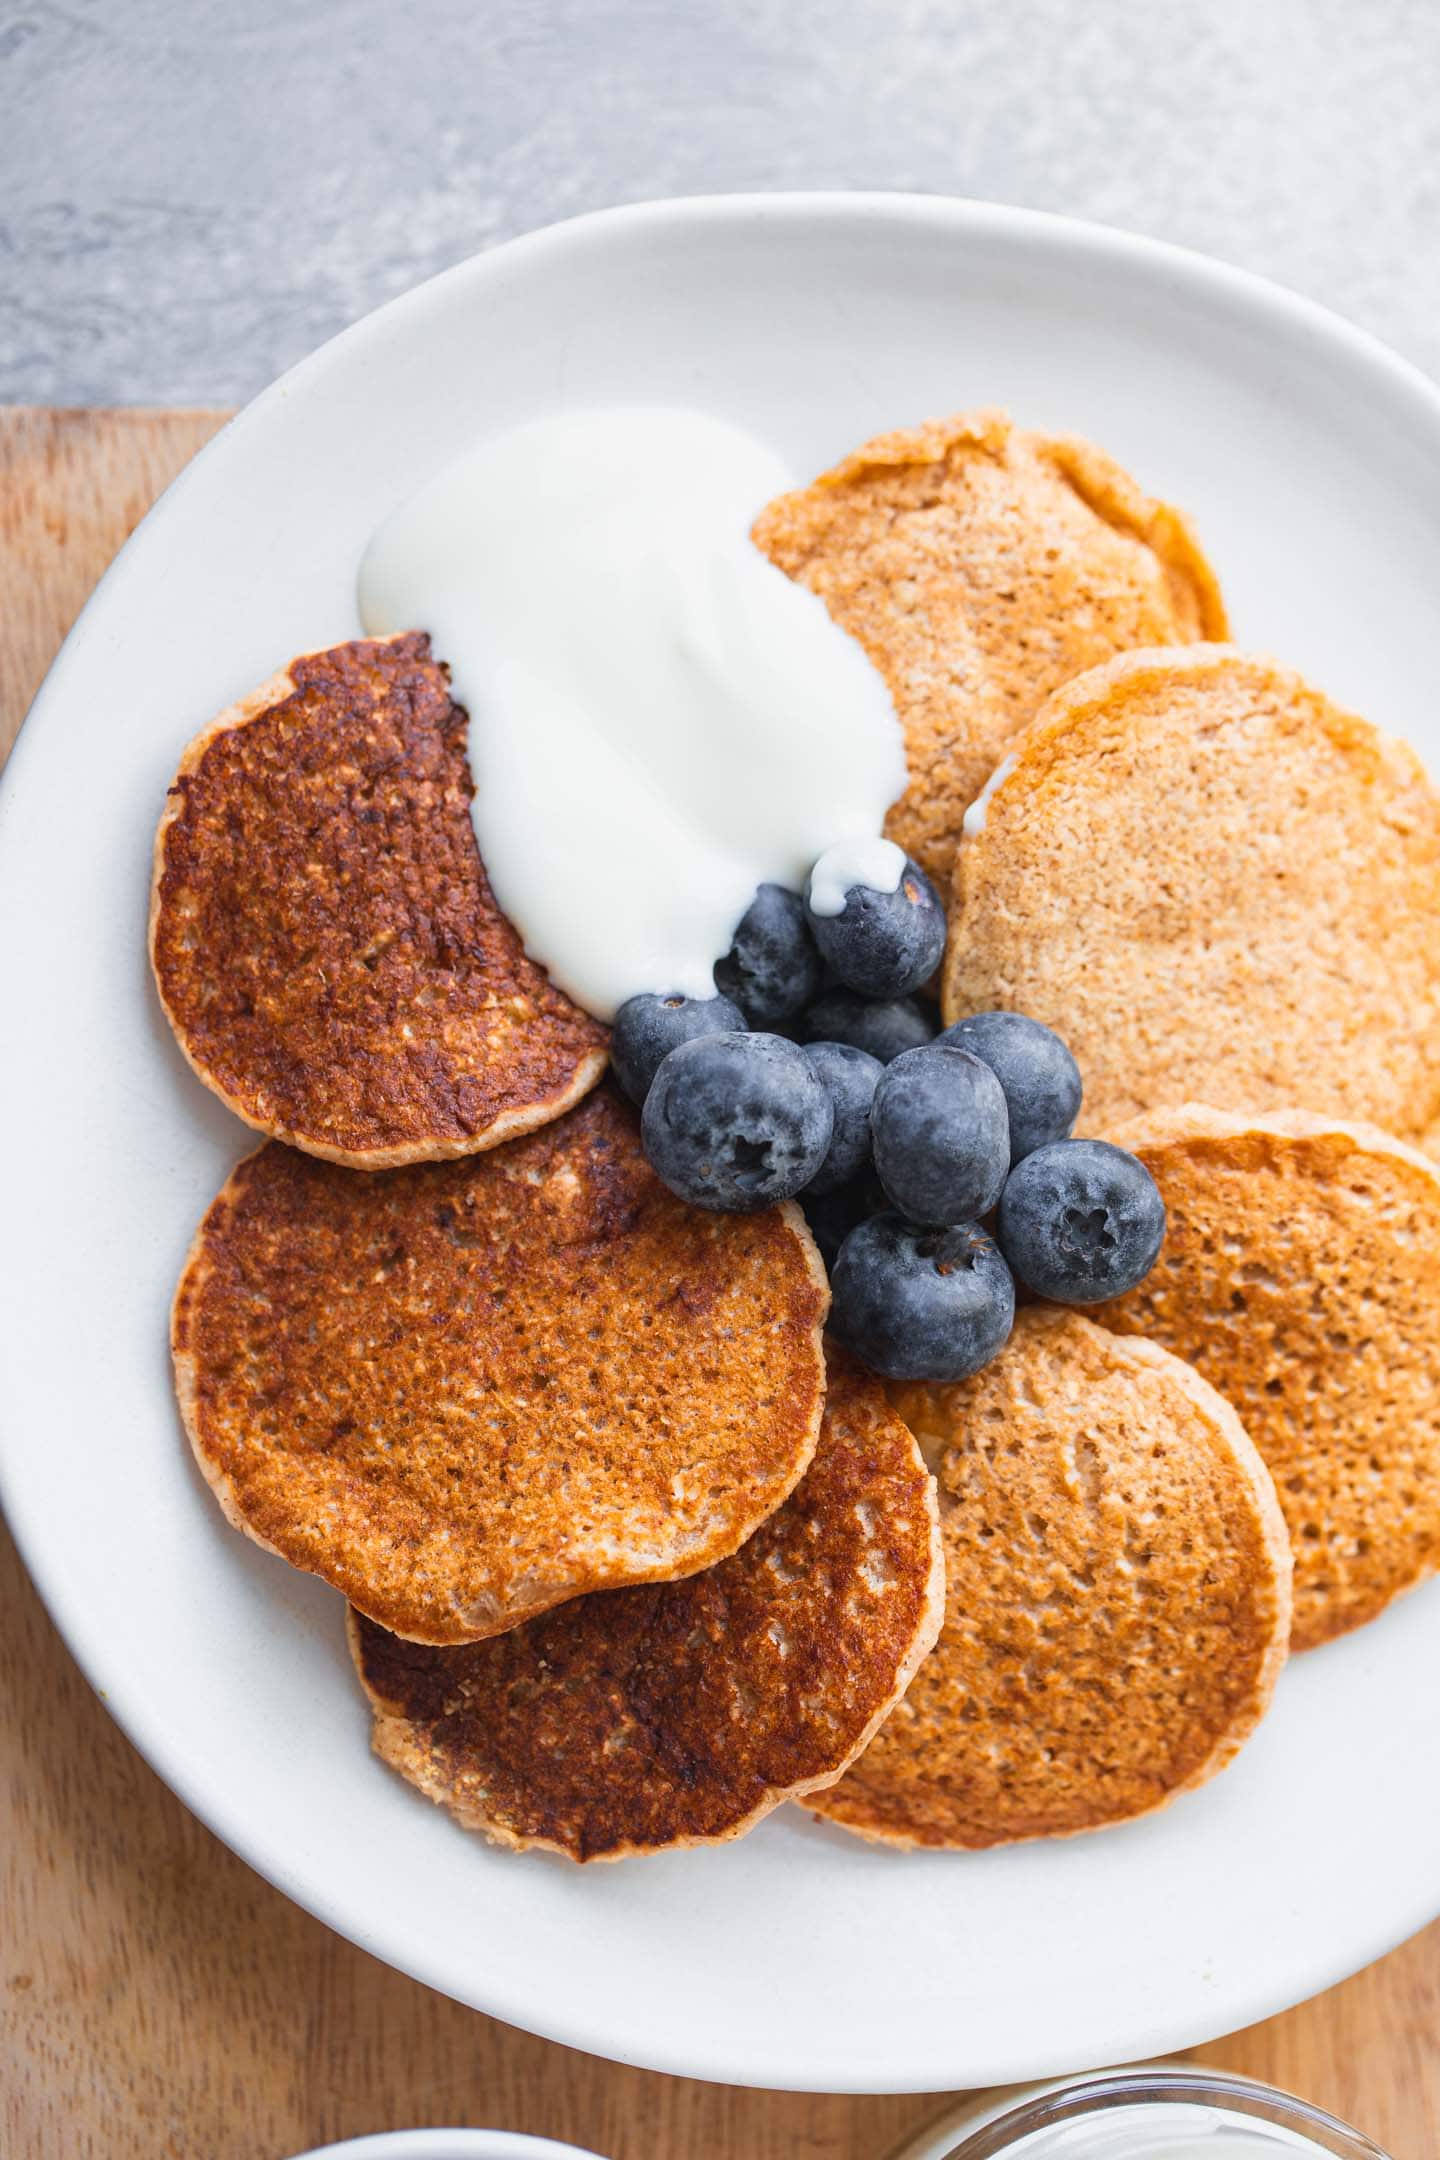 Cinnamon pancakes with berries and soy yoghurt